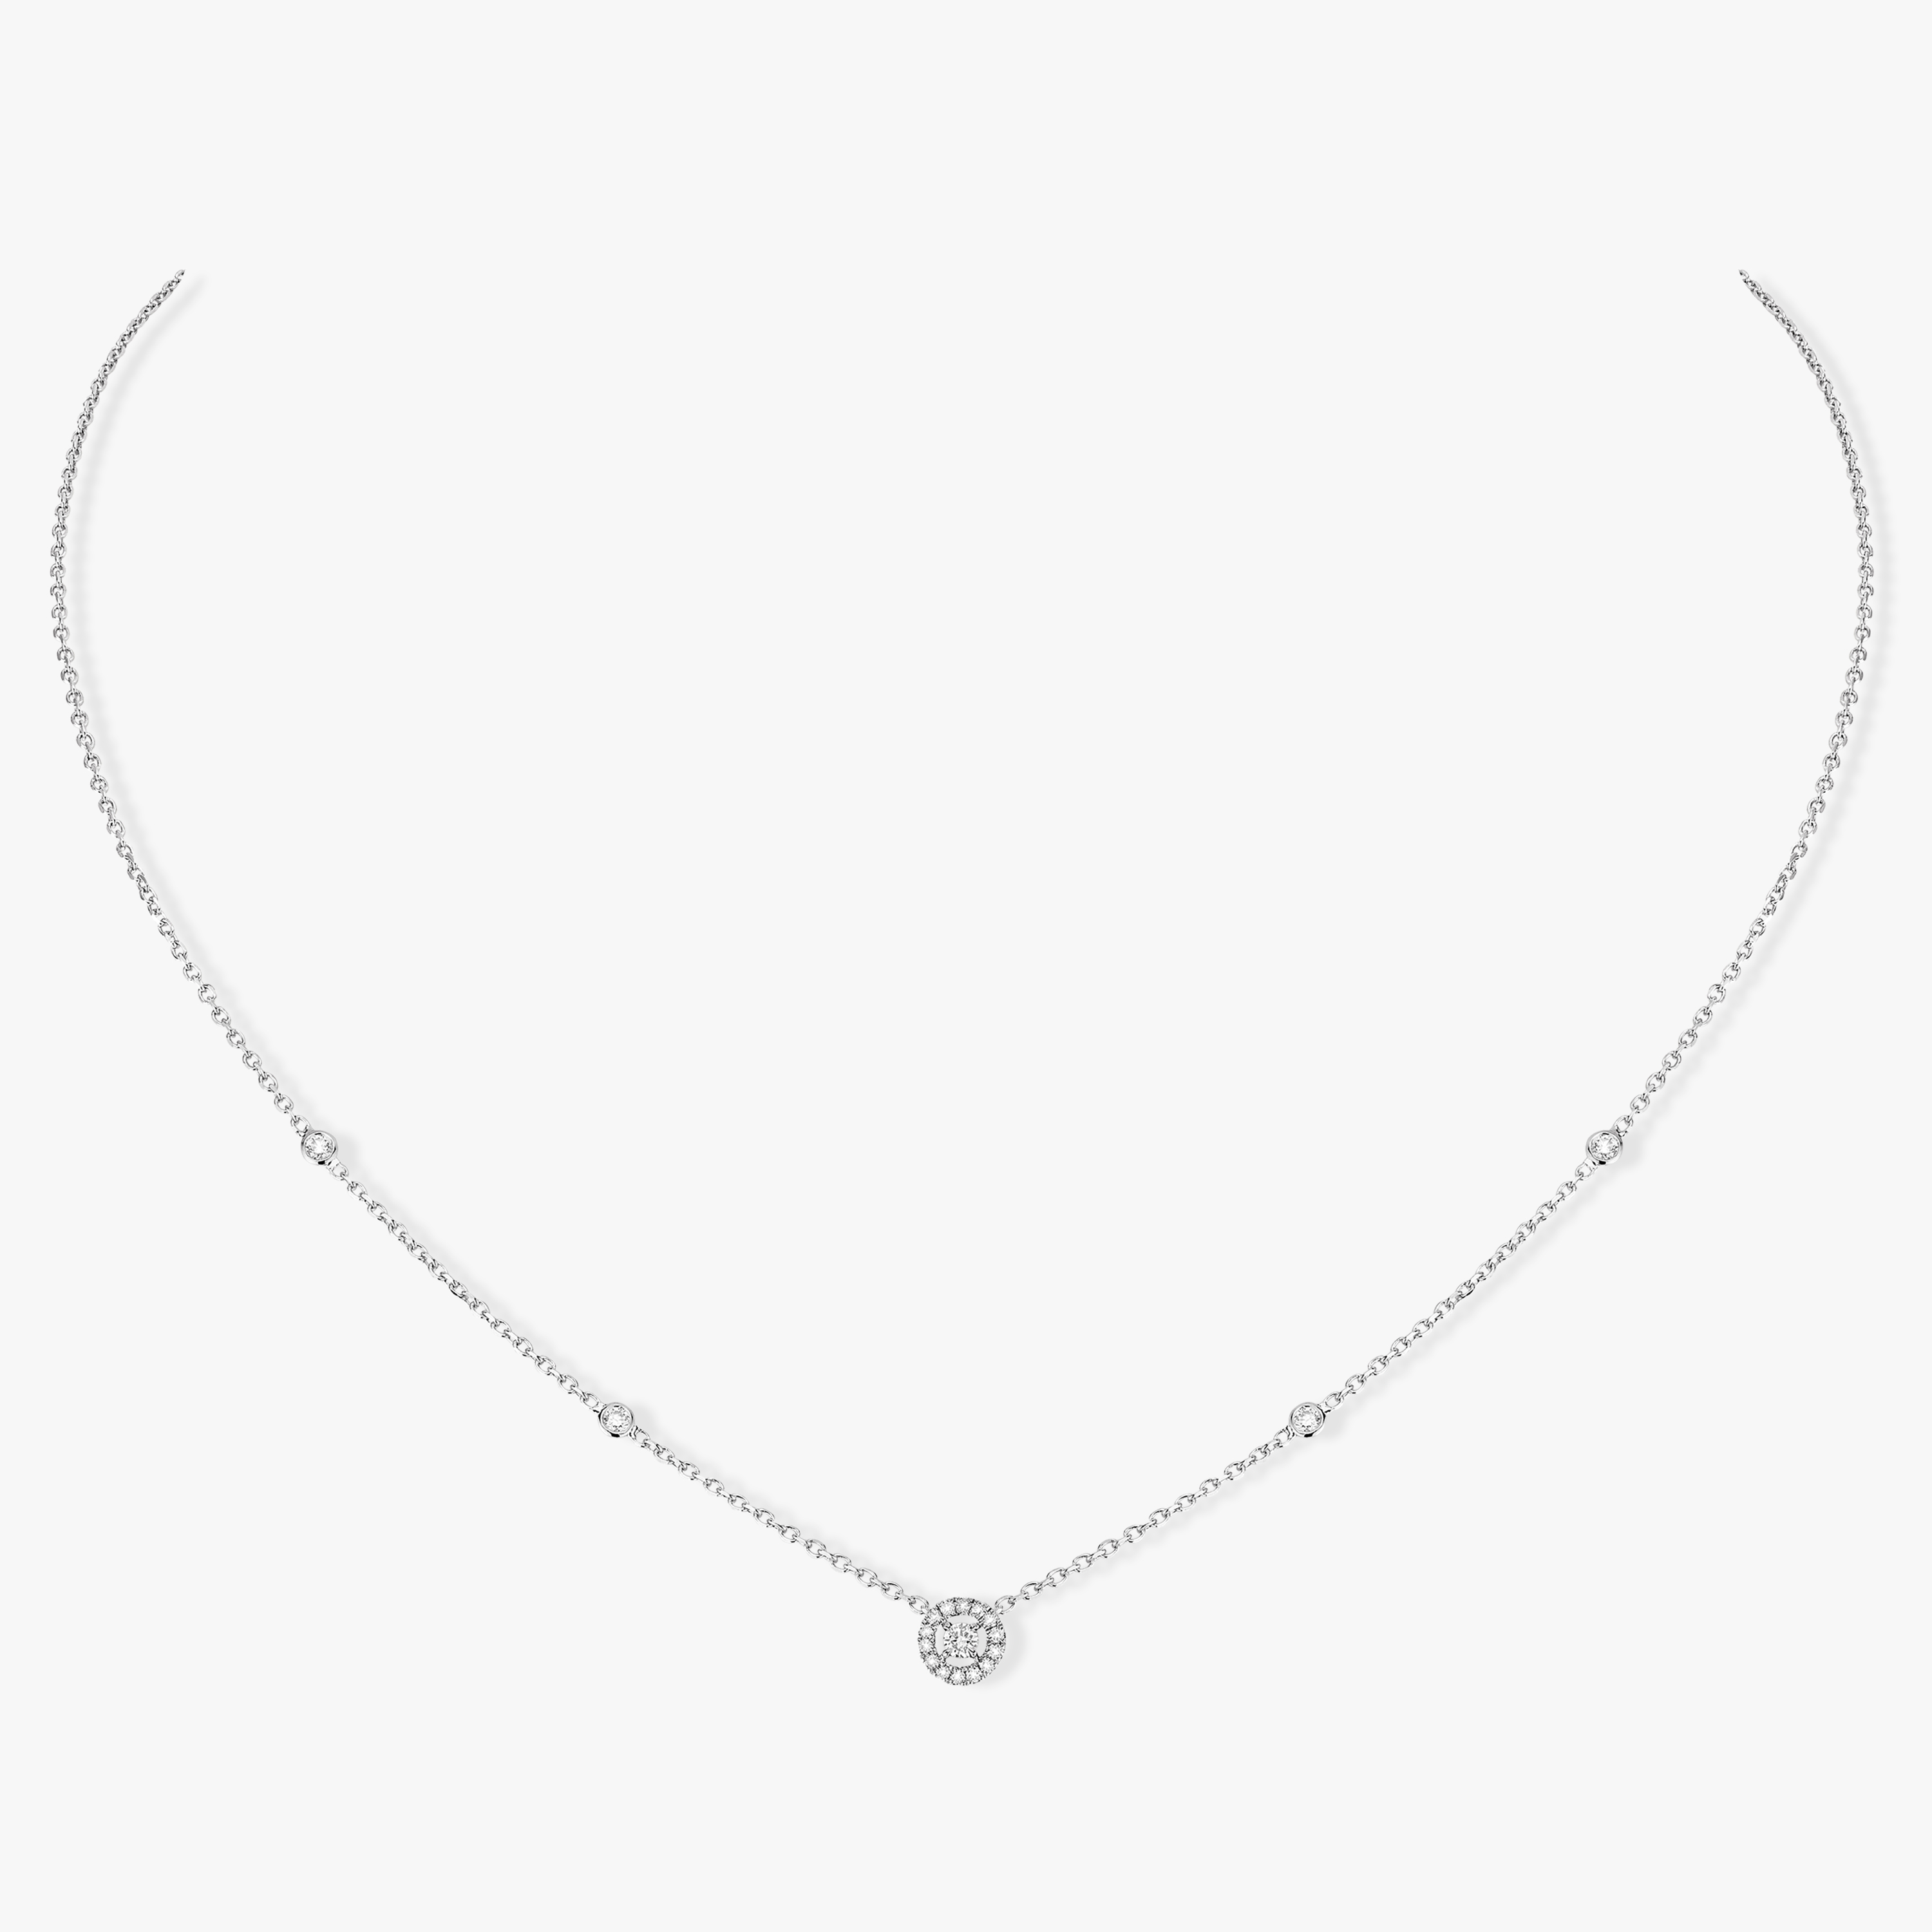 Joy XS White Gold For Her Diamond Necklace 05370-WG